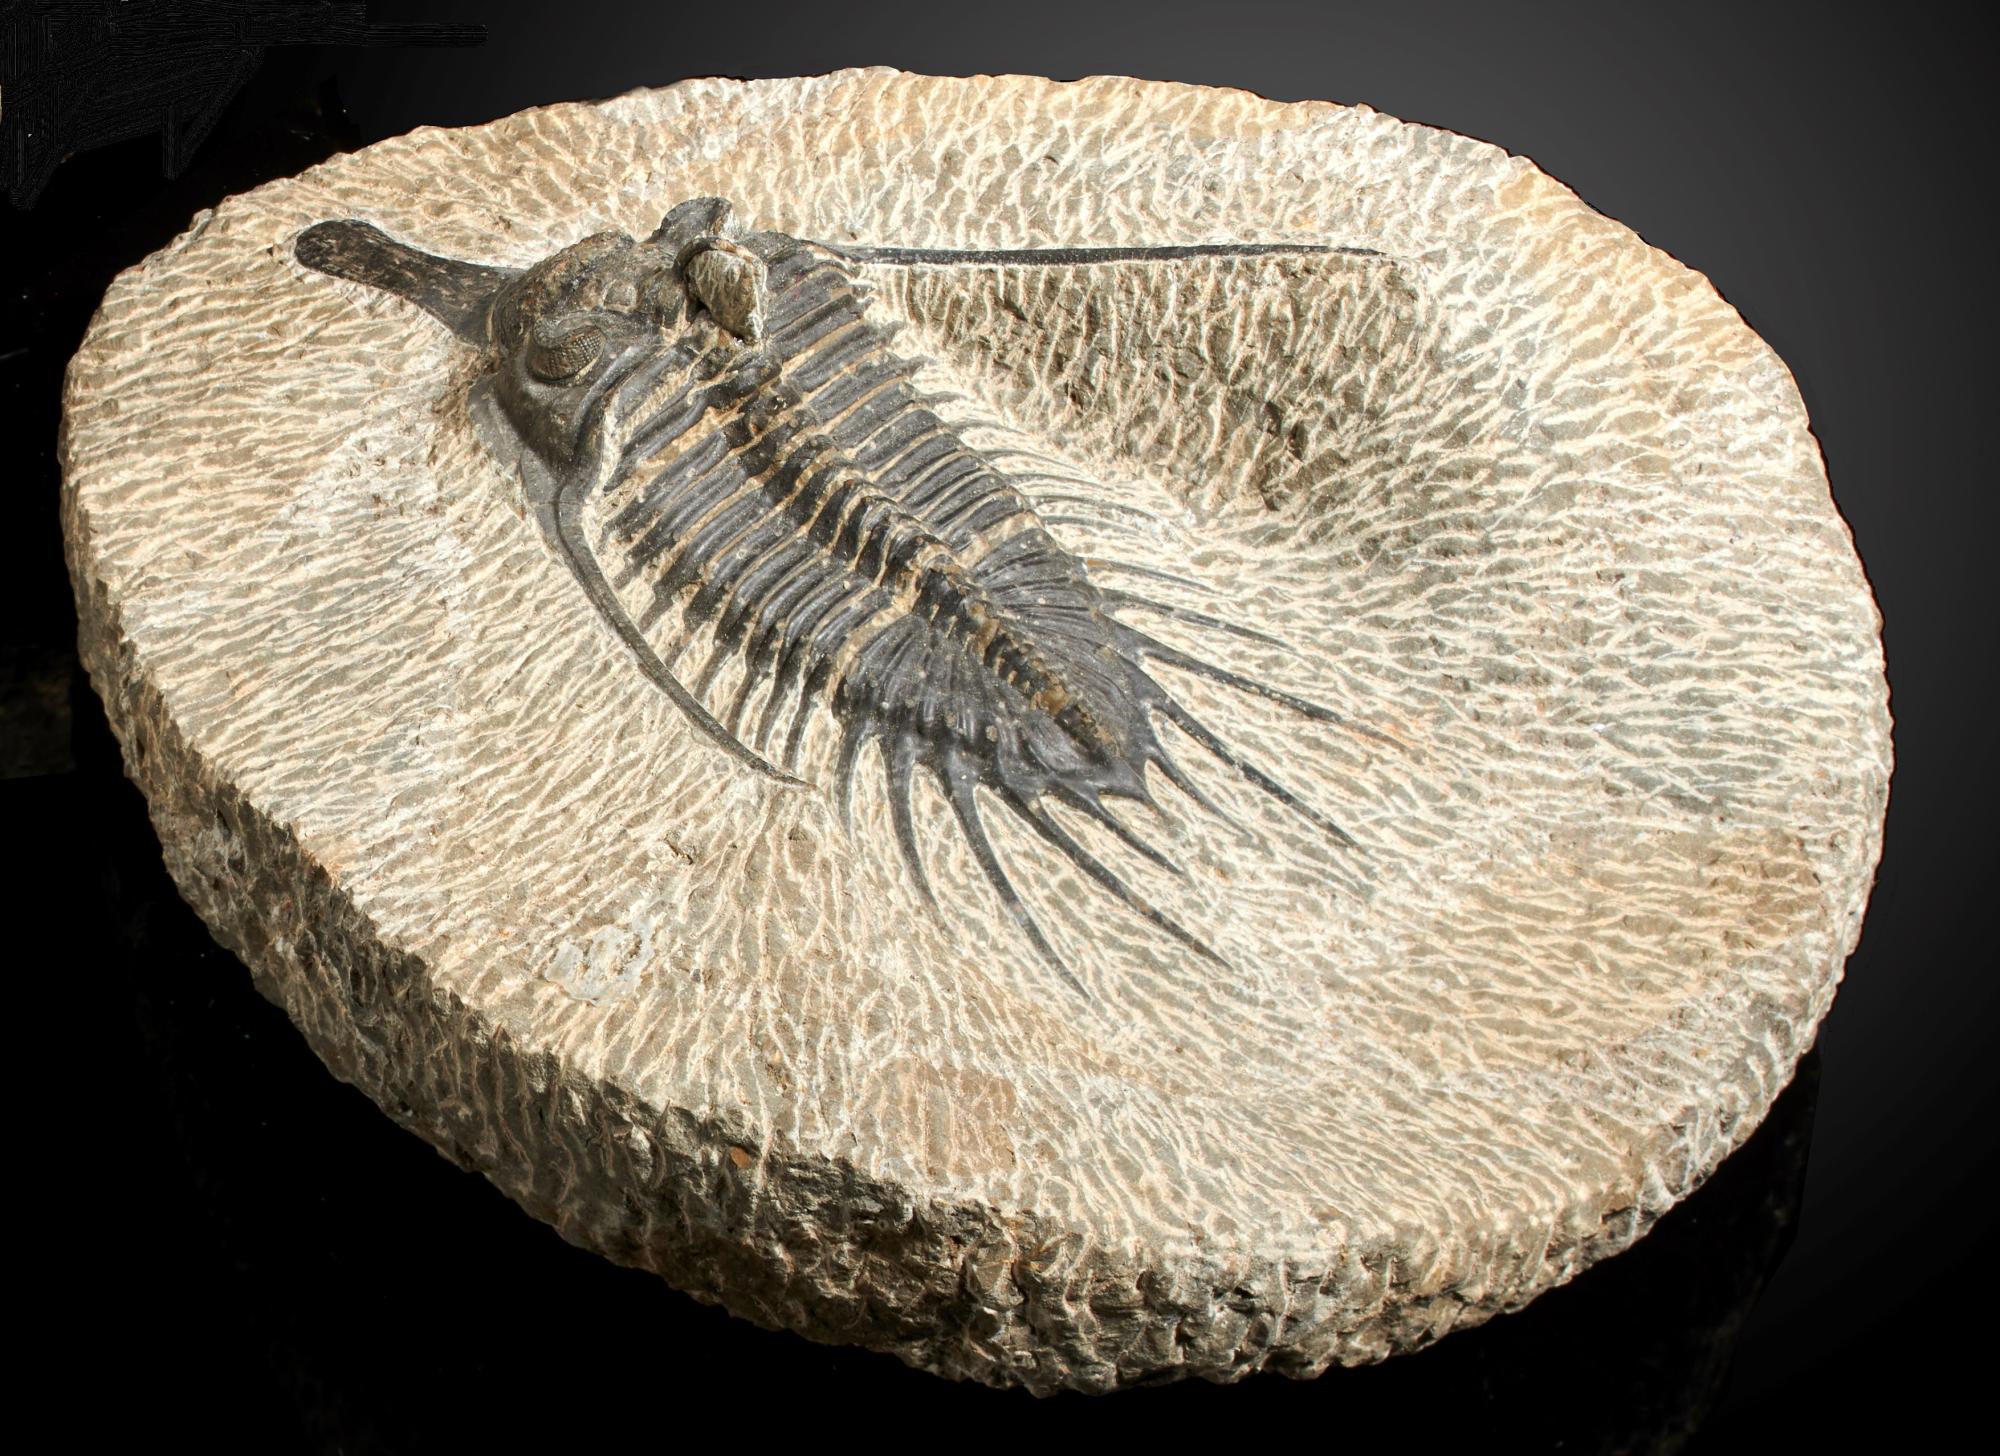 Fossils: A psychopyge spp. trilobiteMoroccoDevonian16cm overall